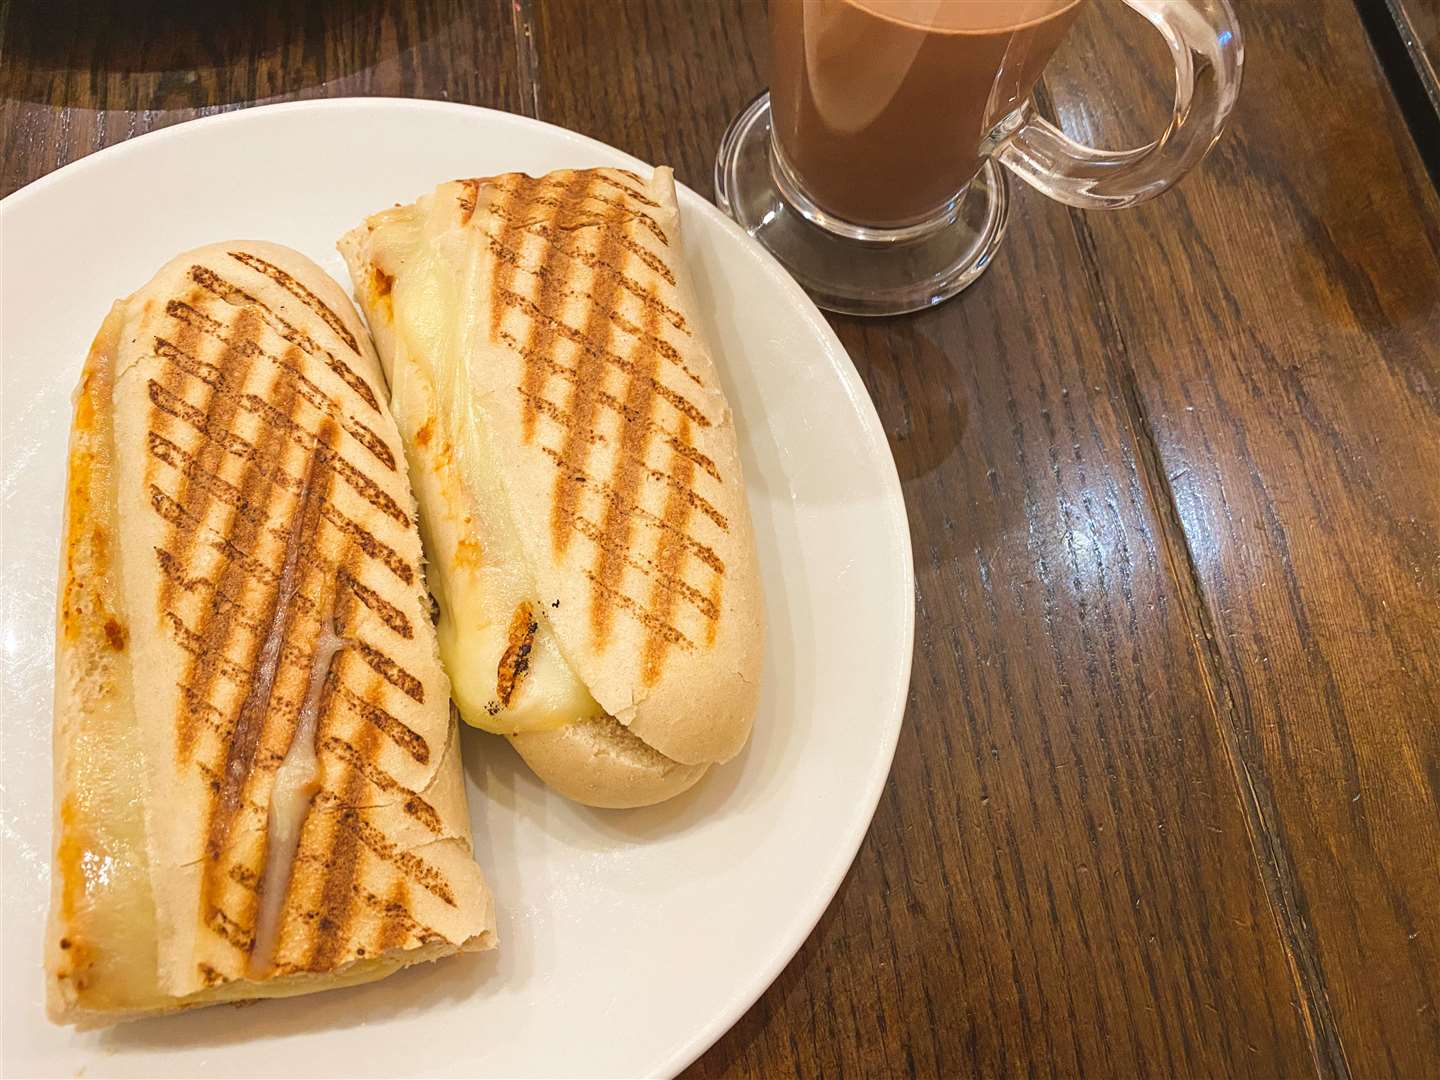 Mozzarella and red pesto panini alongside the toasted marshmallow hot chocolate